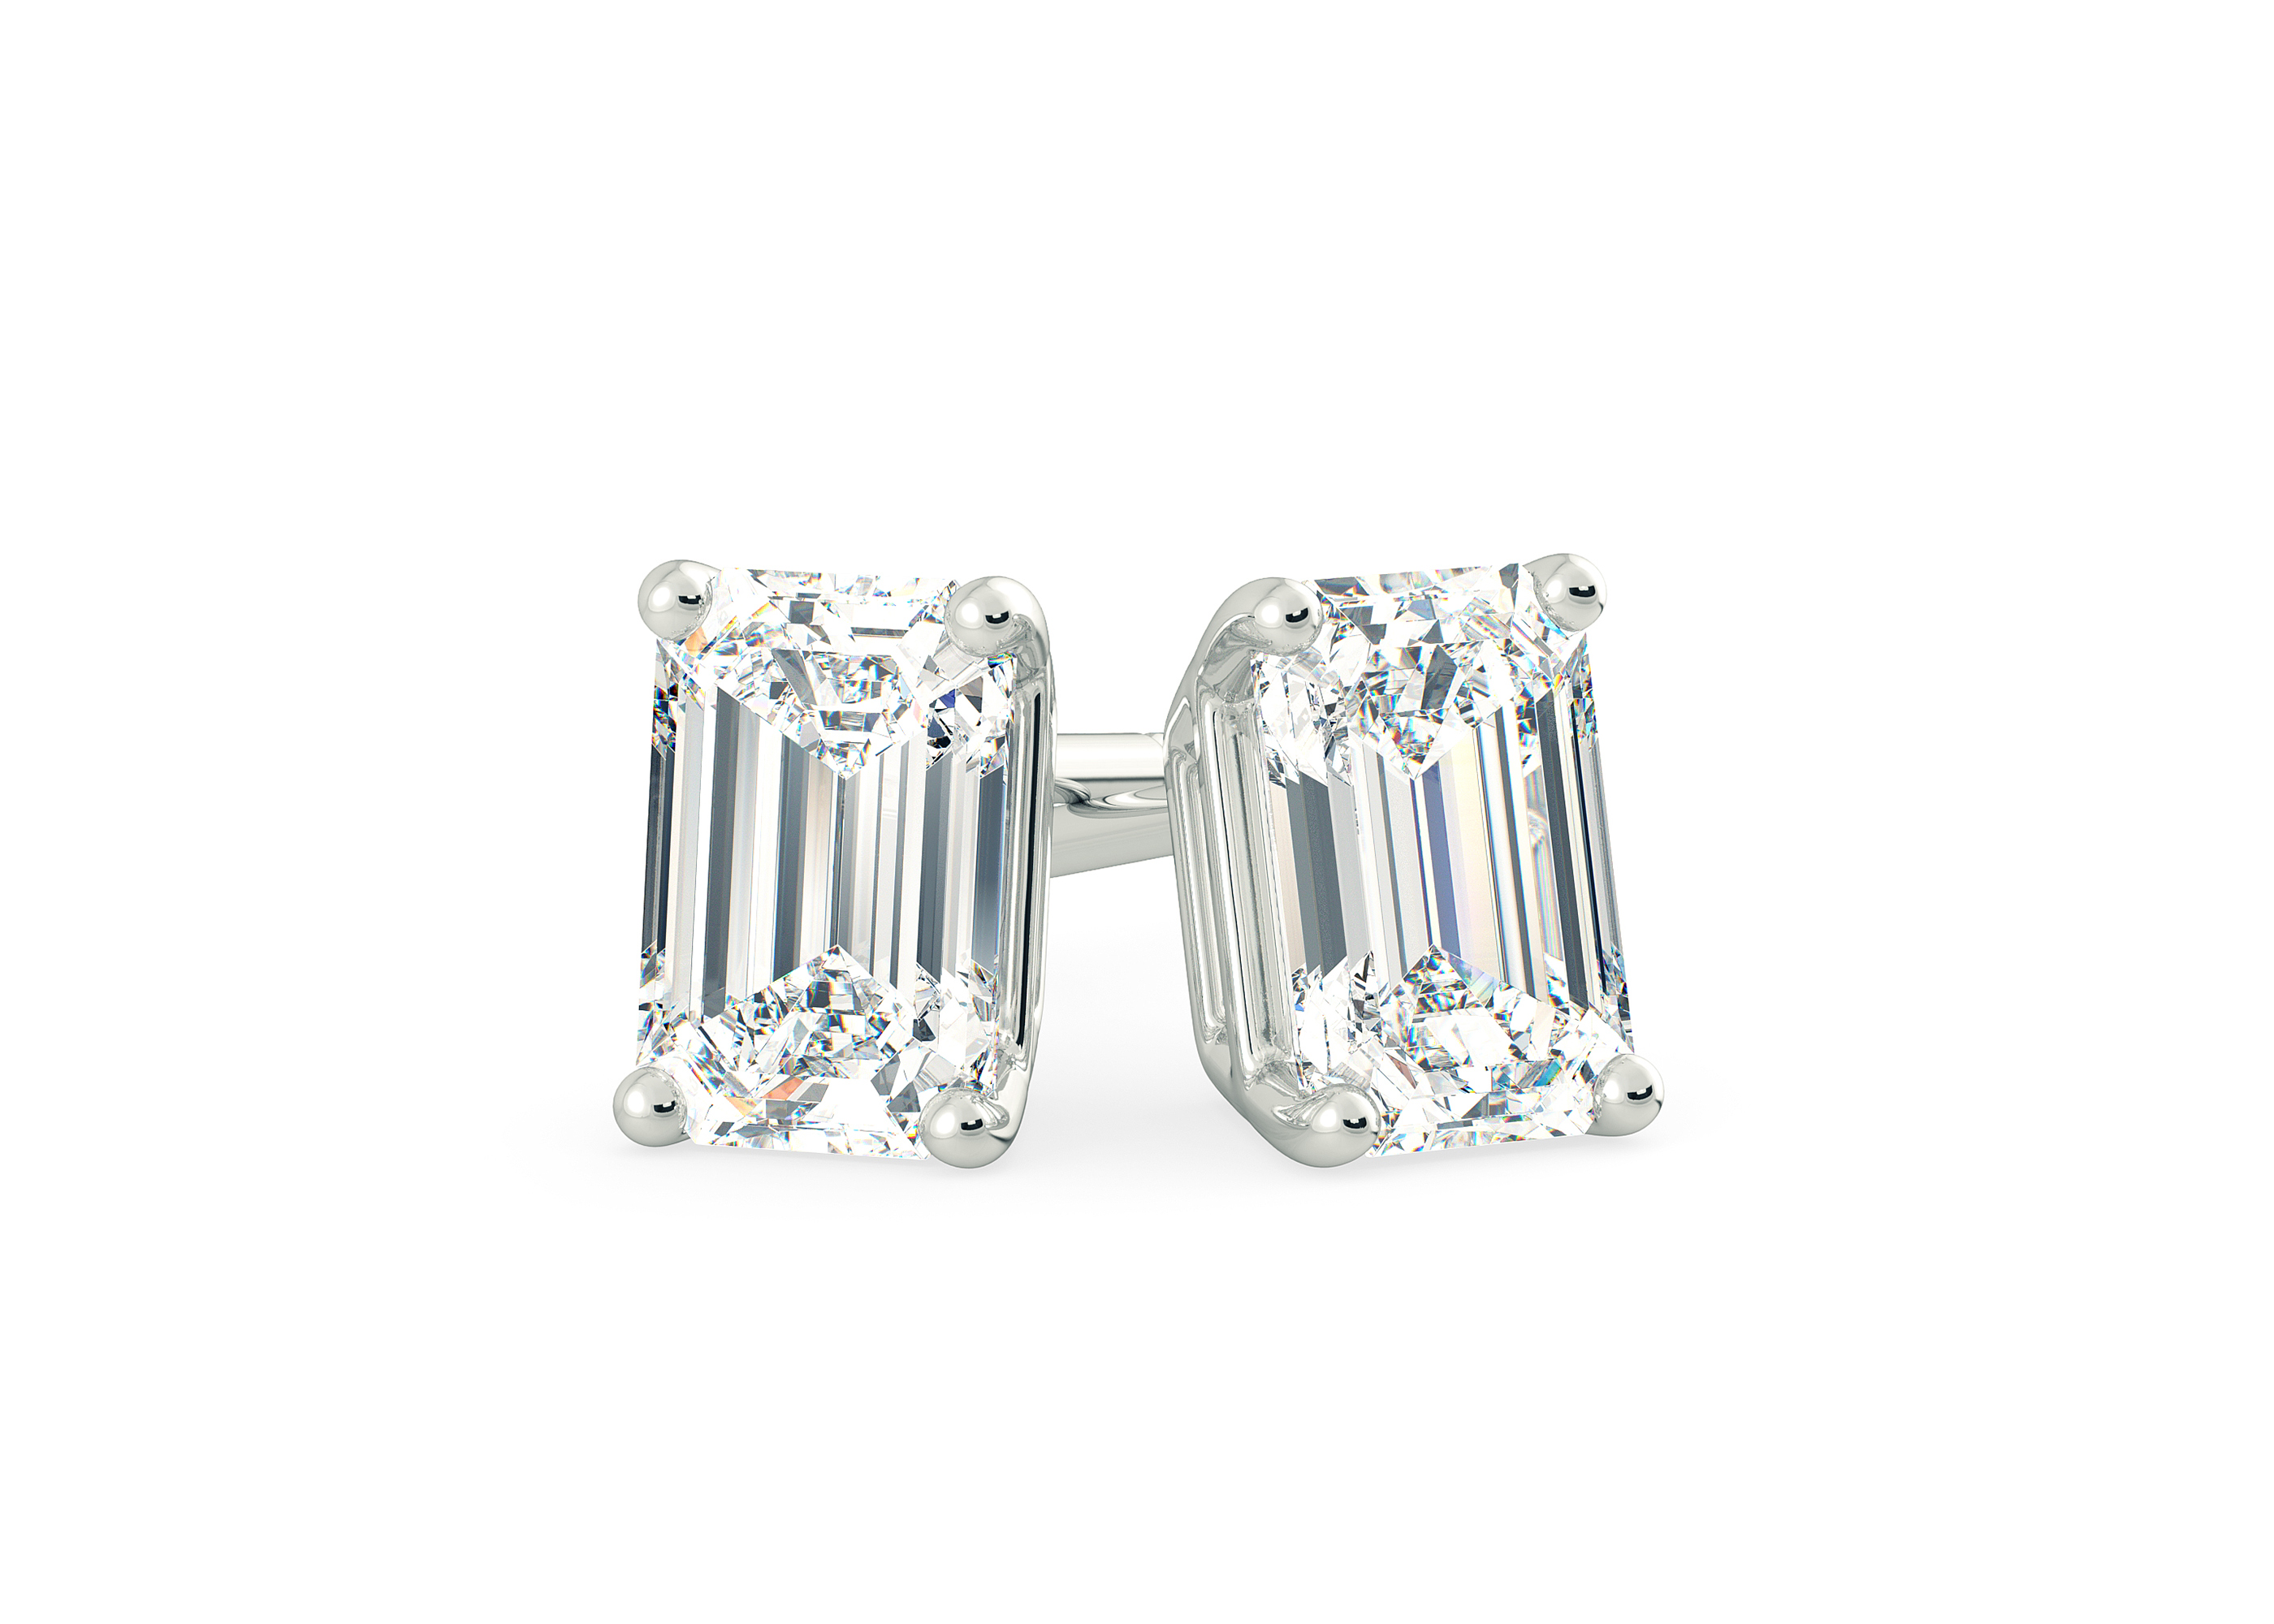 One Carat Emerald Diamond Stud Earrings in Platinum 950